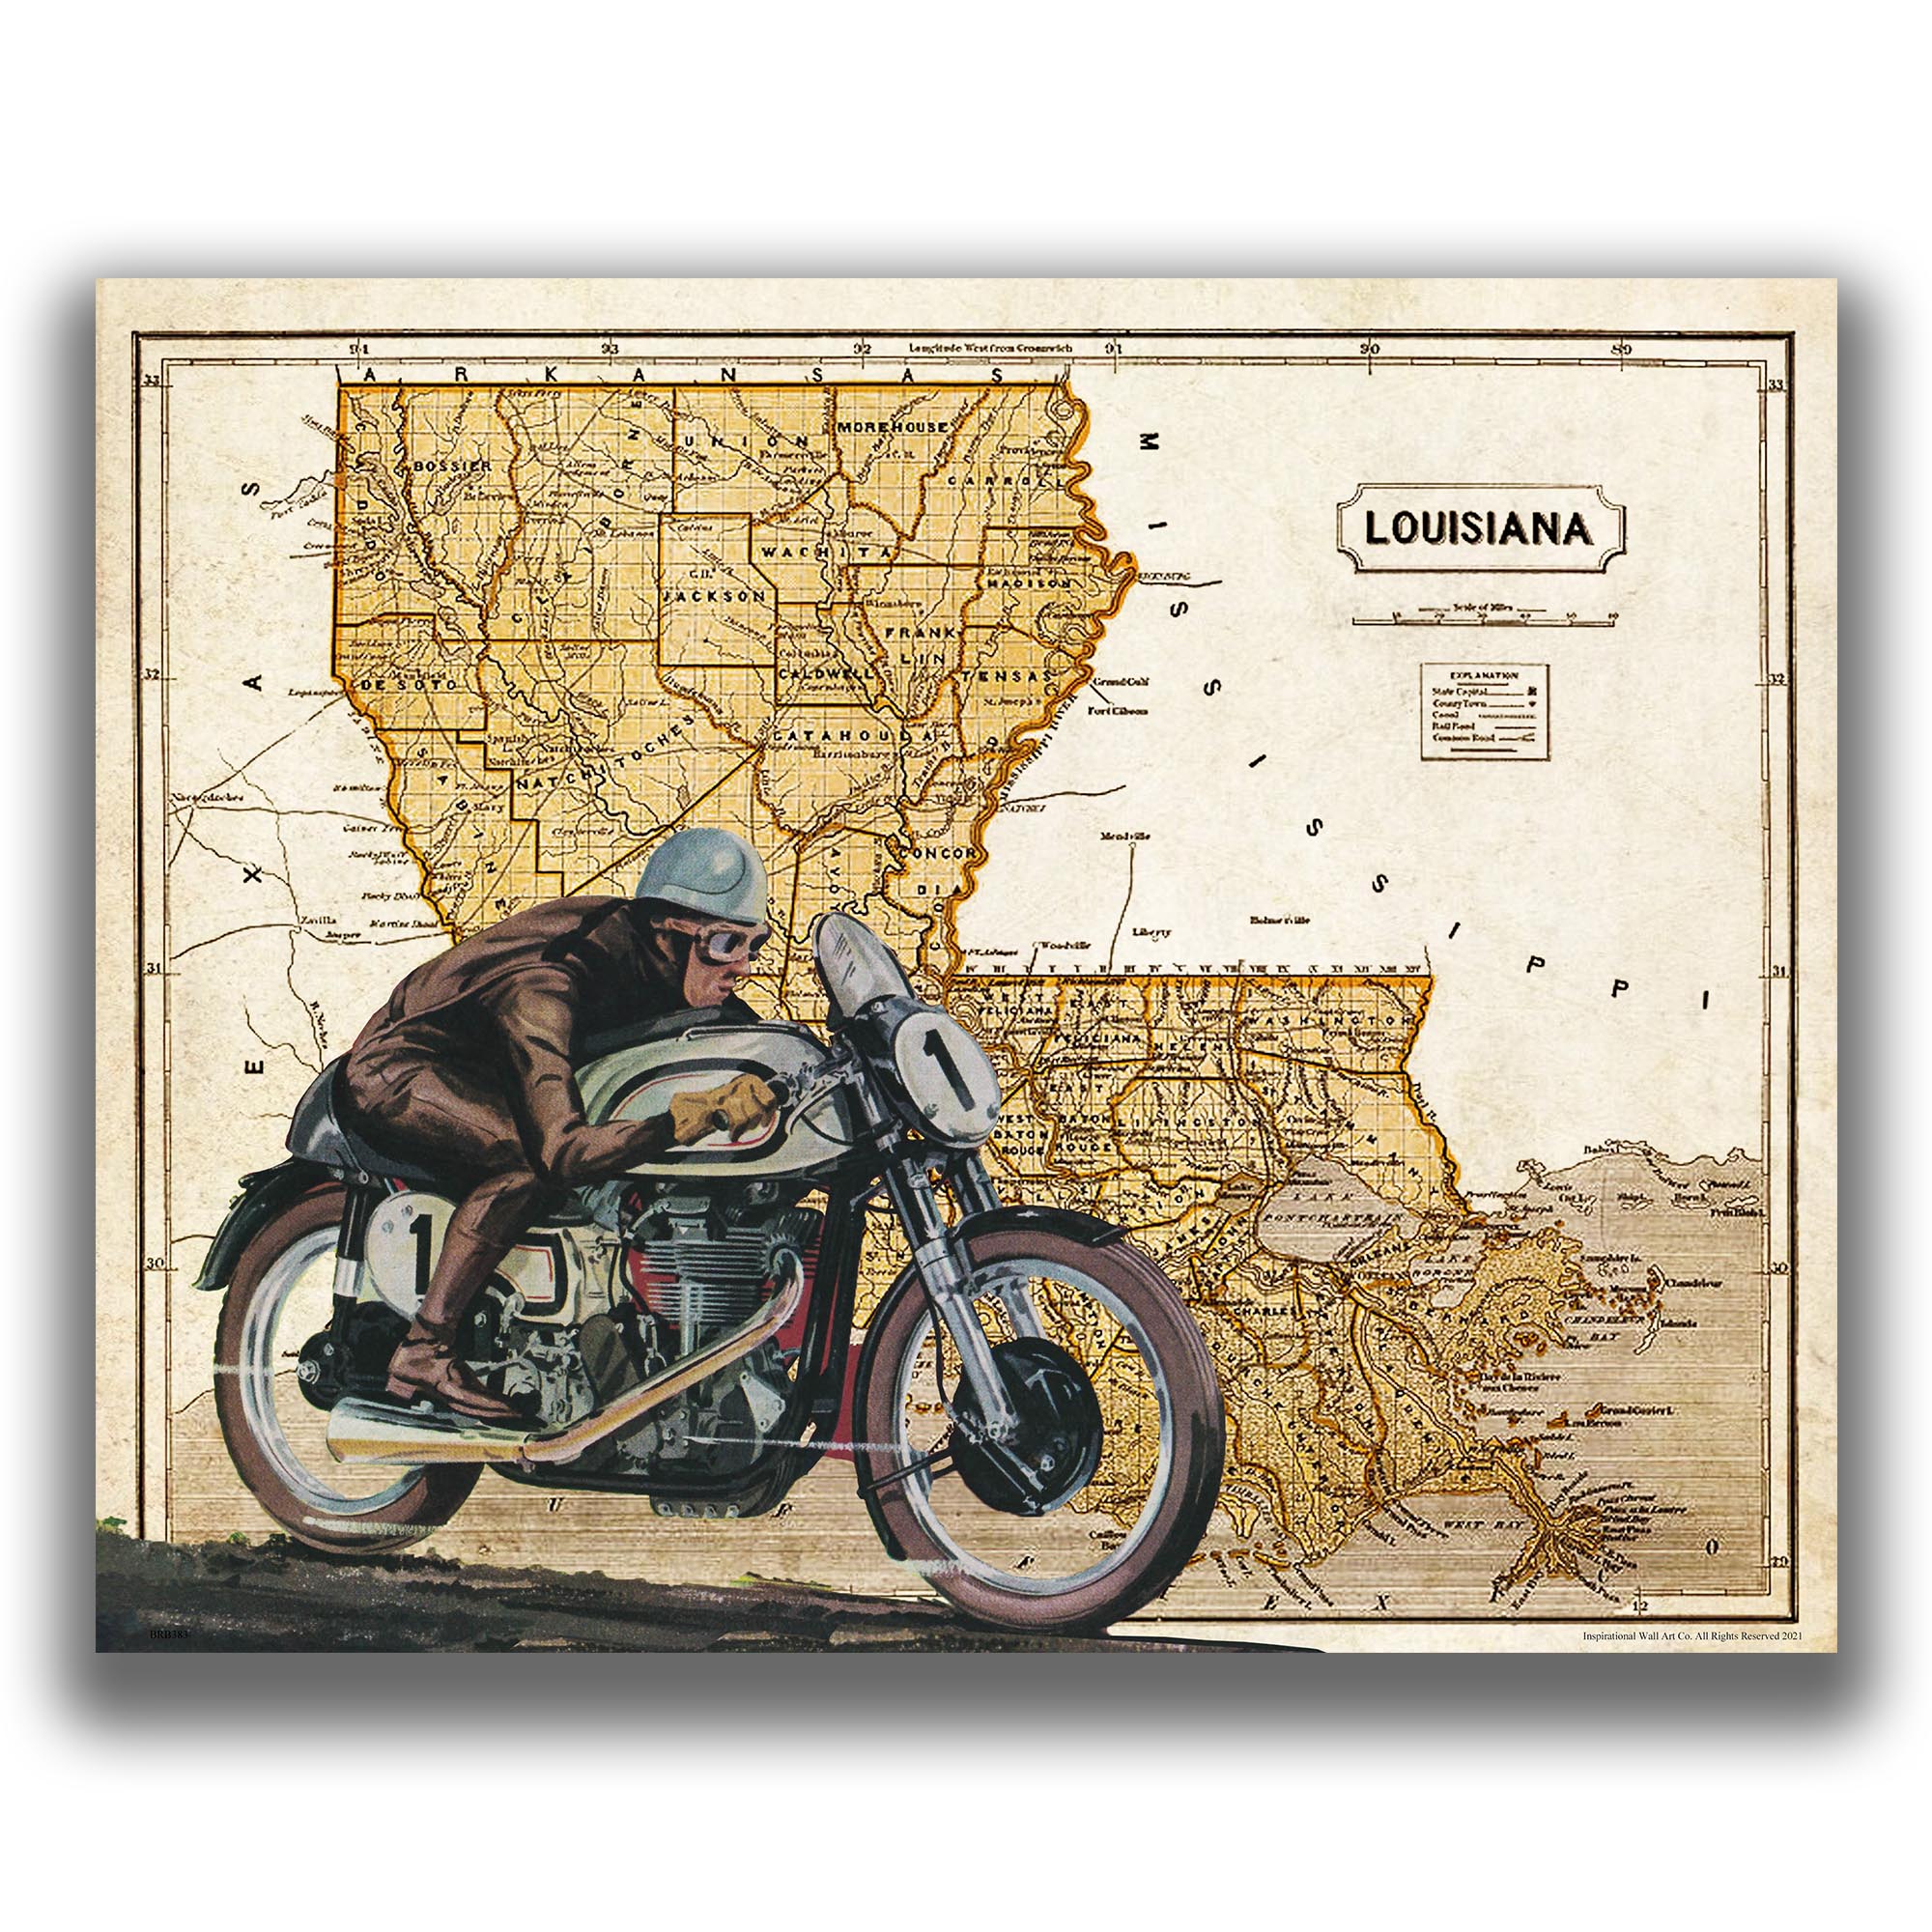 Louisiana - Motorcycle Poster